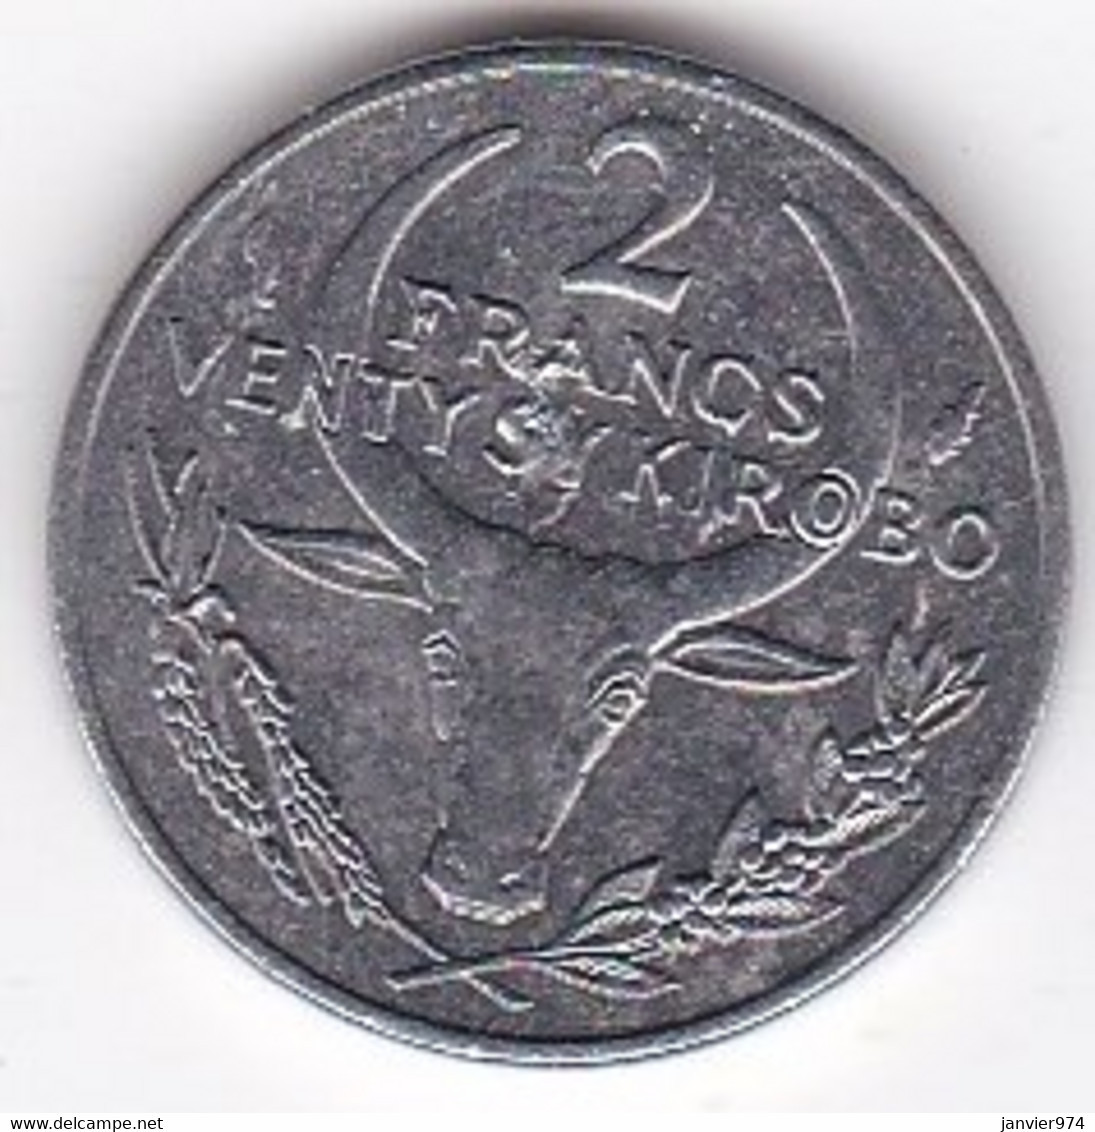 Madagascar 2 Francs 1979,  Acier Inoxydable, KM# 9 - Madagascar